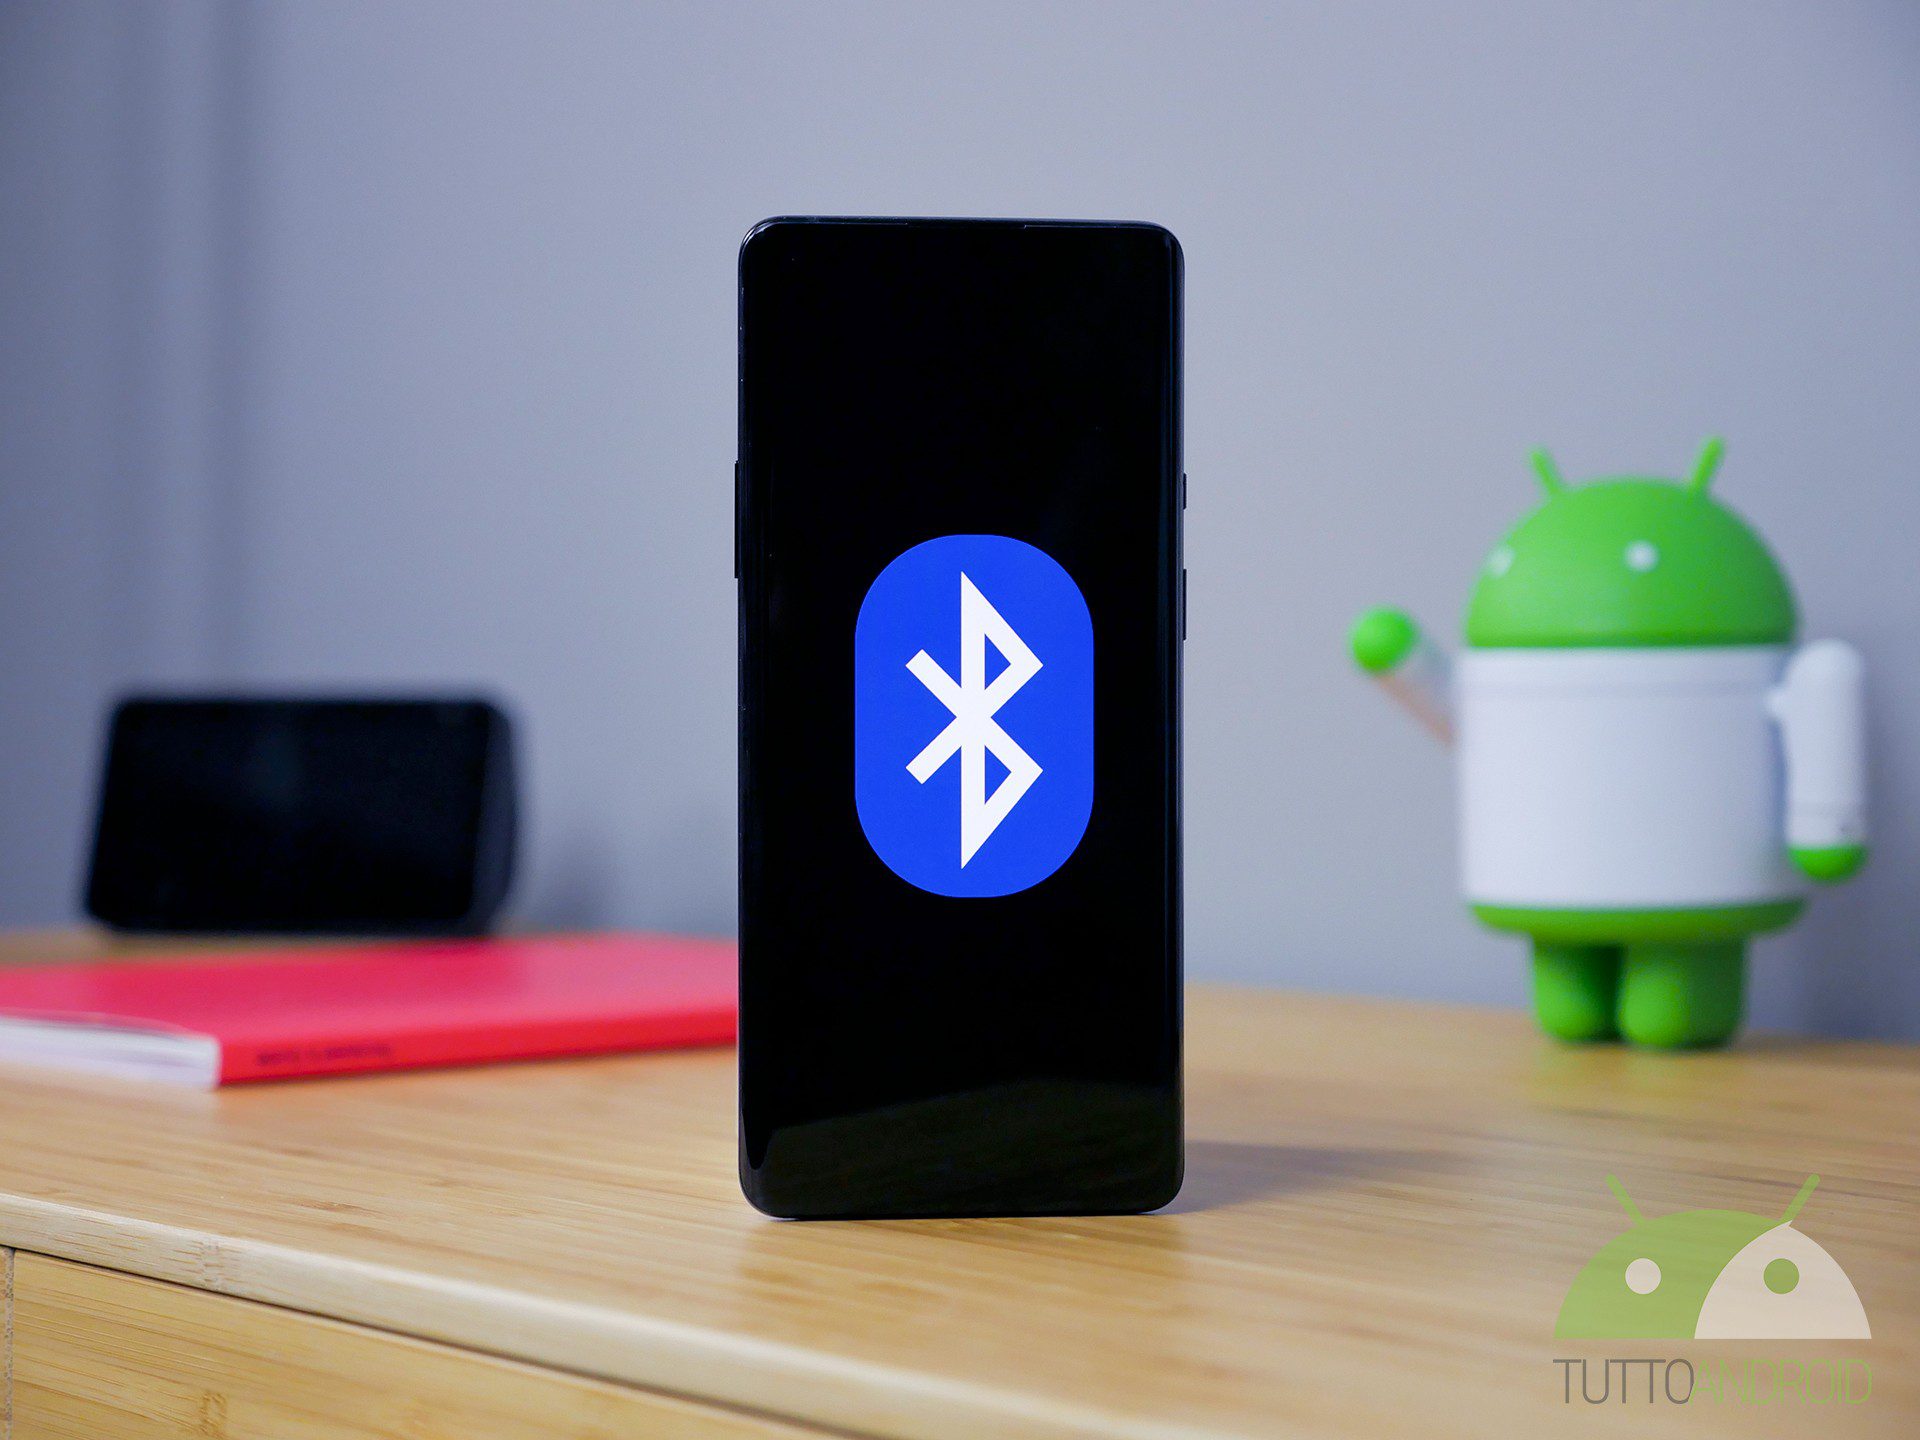 Bluetooth logo